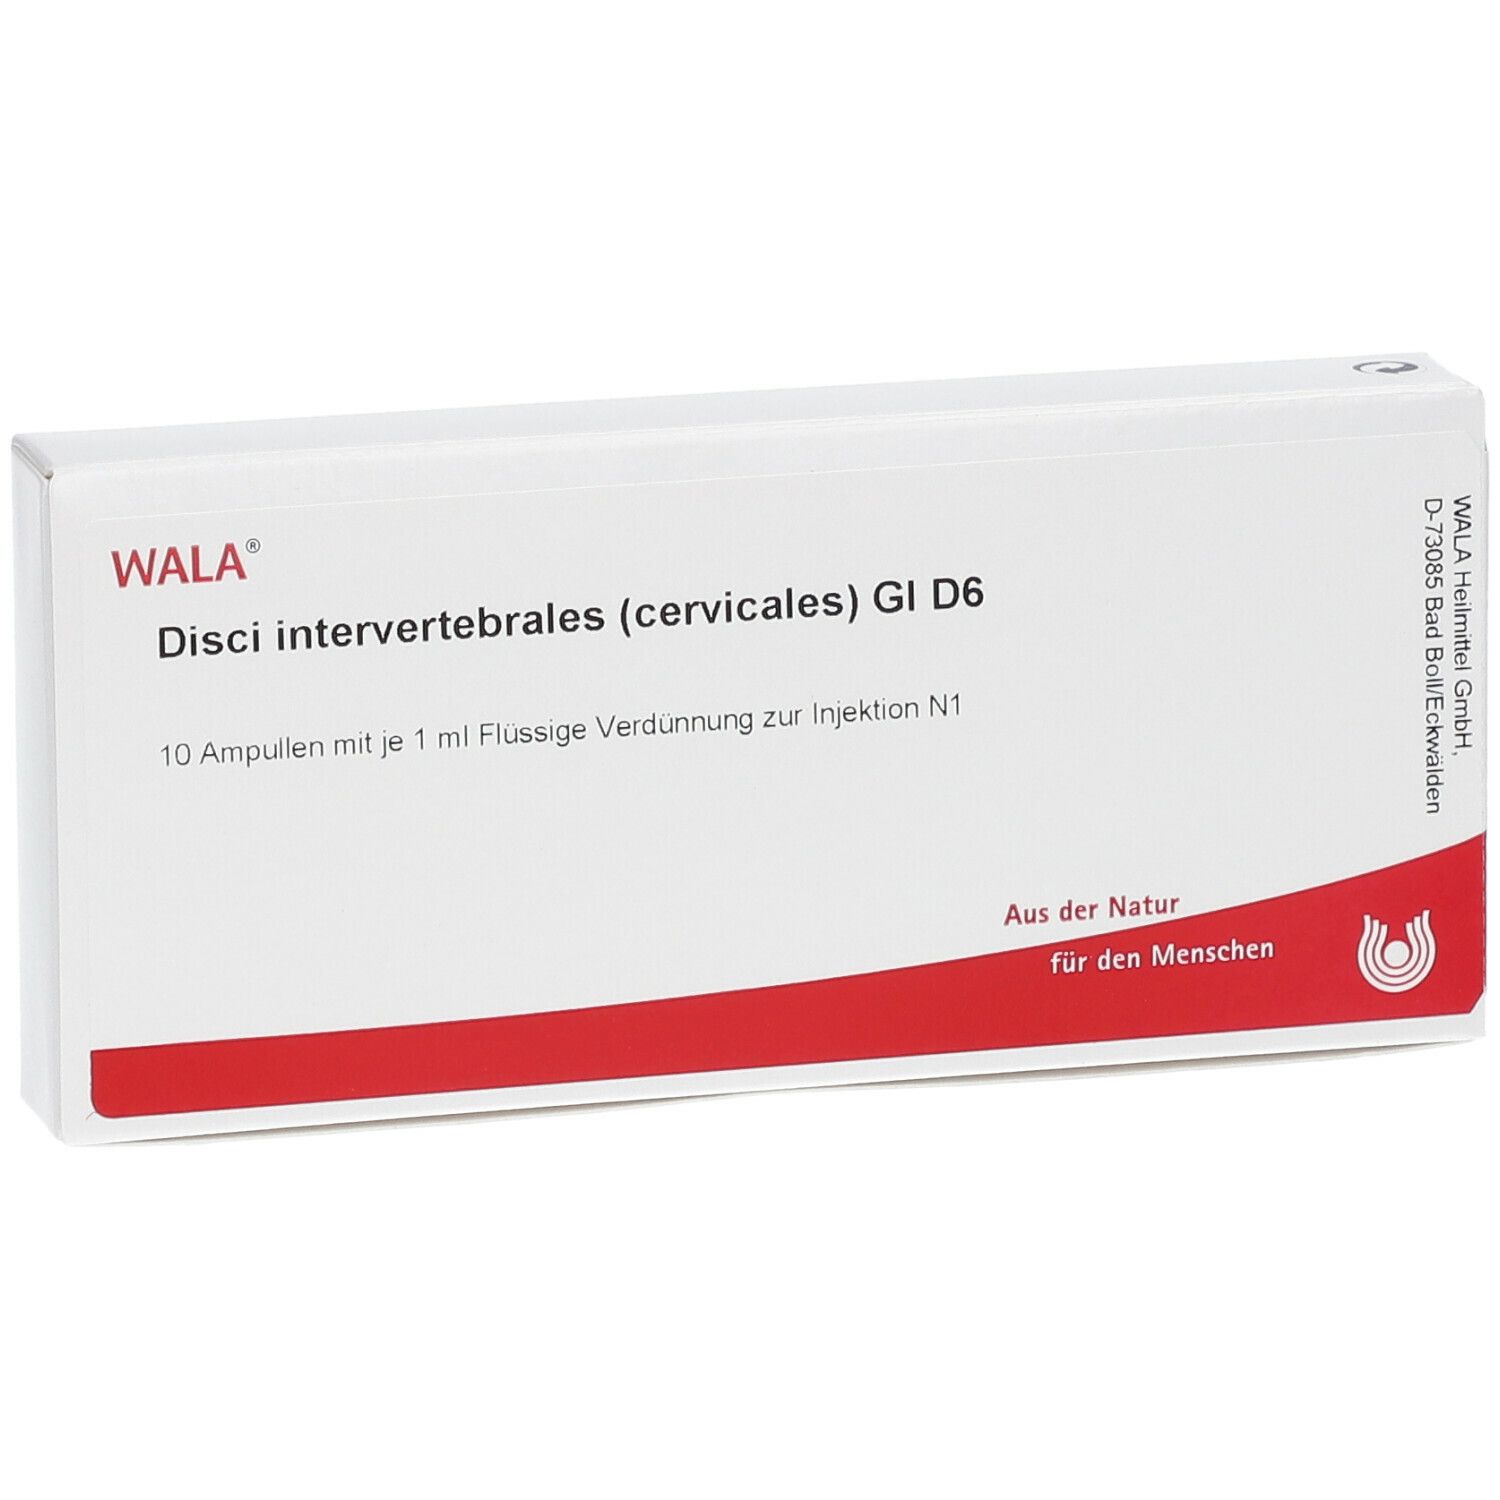 WALA® Disci intervertebrales cervicales Gl D 6